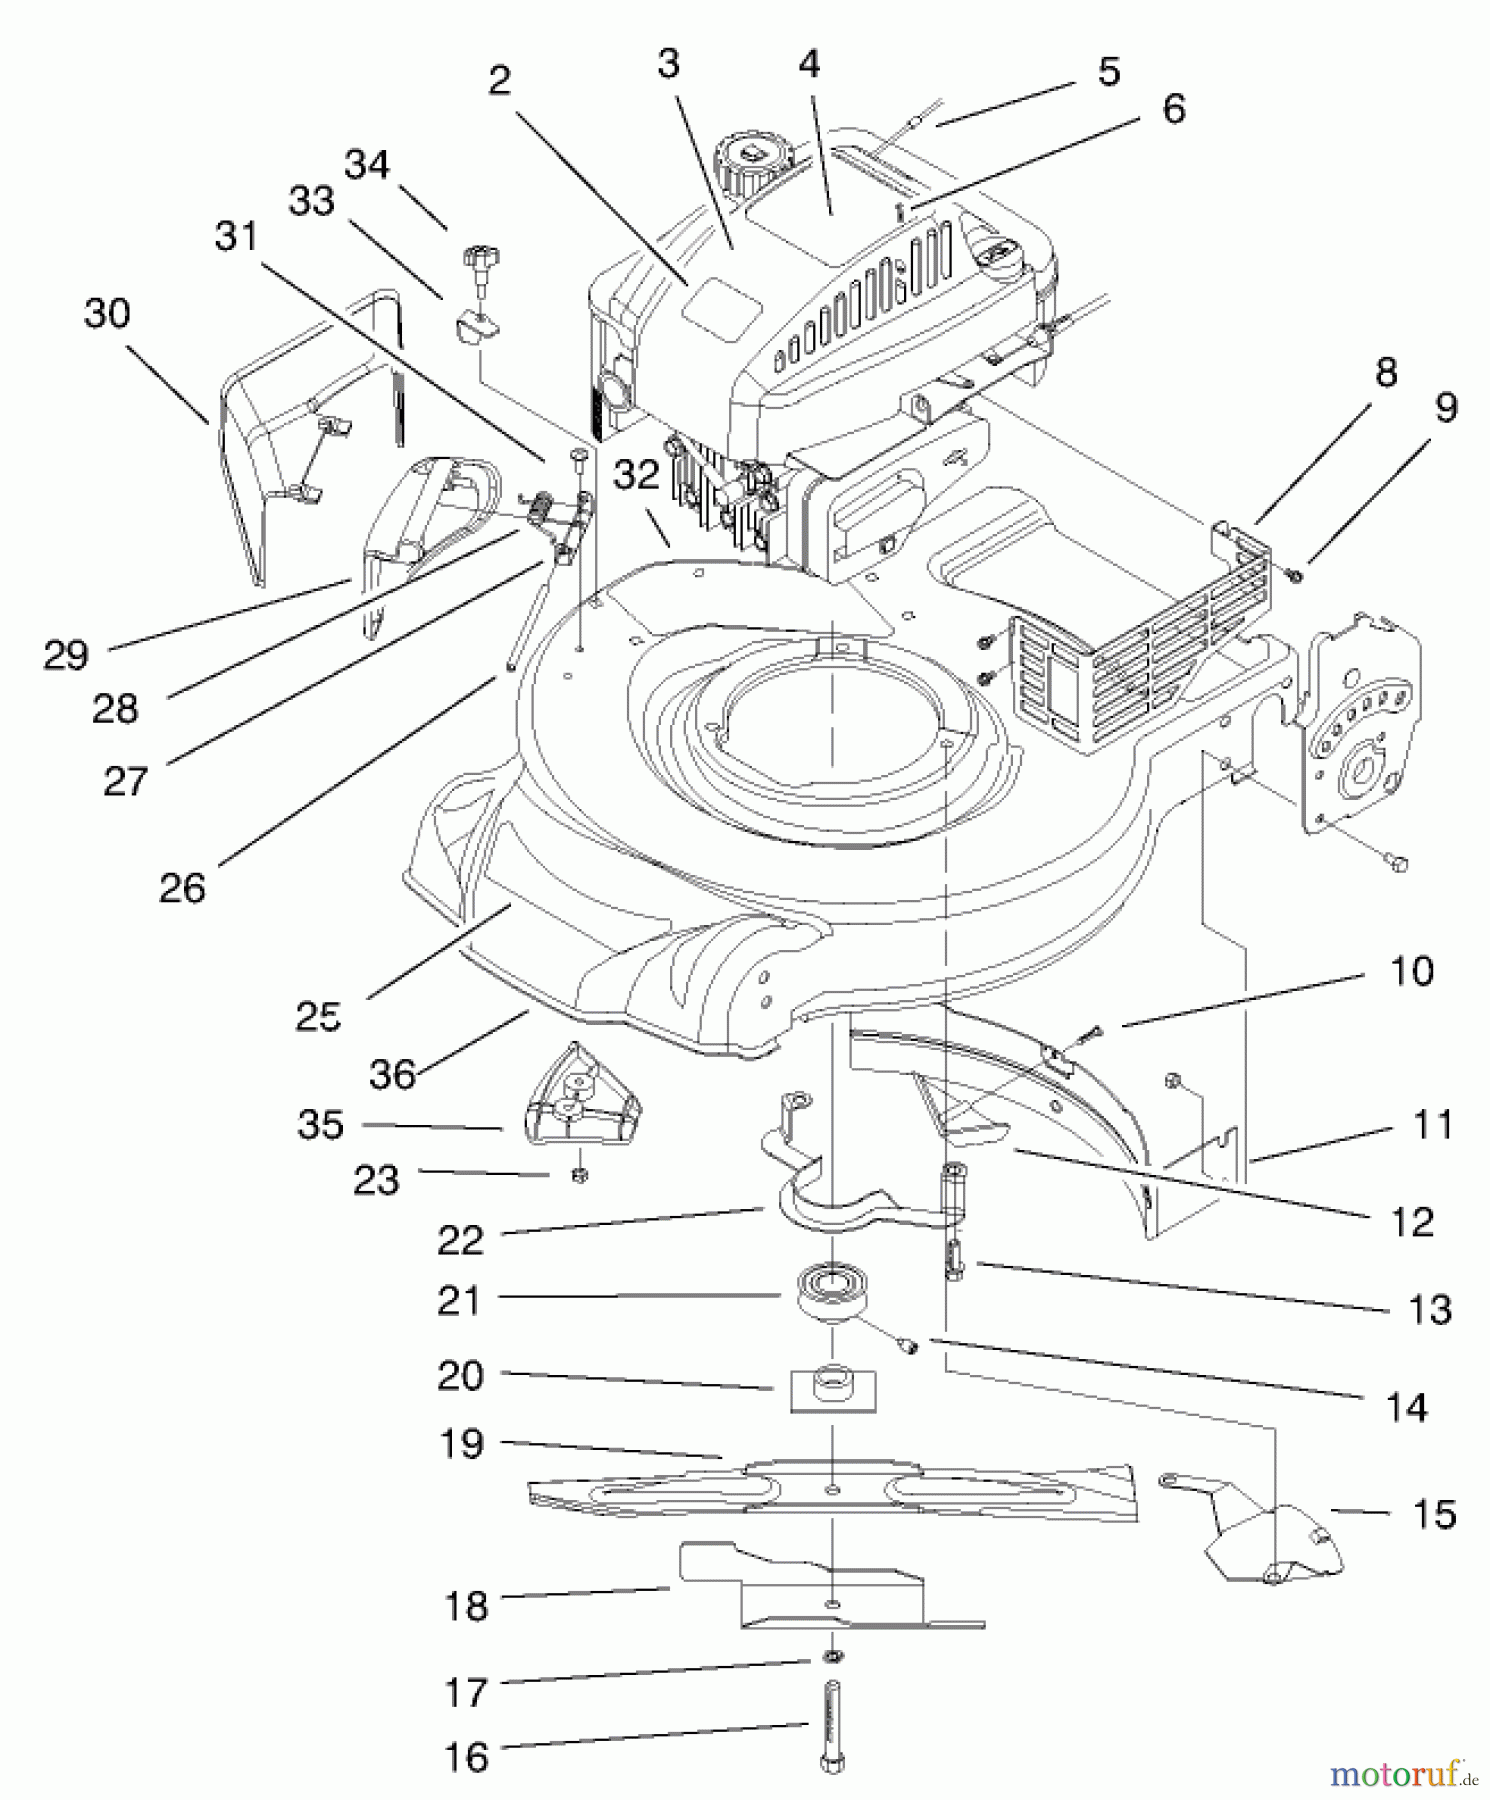  Toro Neu Mowers, Walk-Behind Seite 1 20023 (R-21SB) - Toro Recycler Mower, R-21SB, 1999 (9900001-9999999) ENGINE & BLADE ASSEMBLY